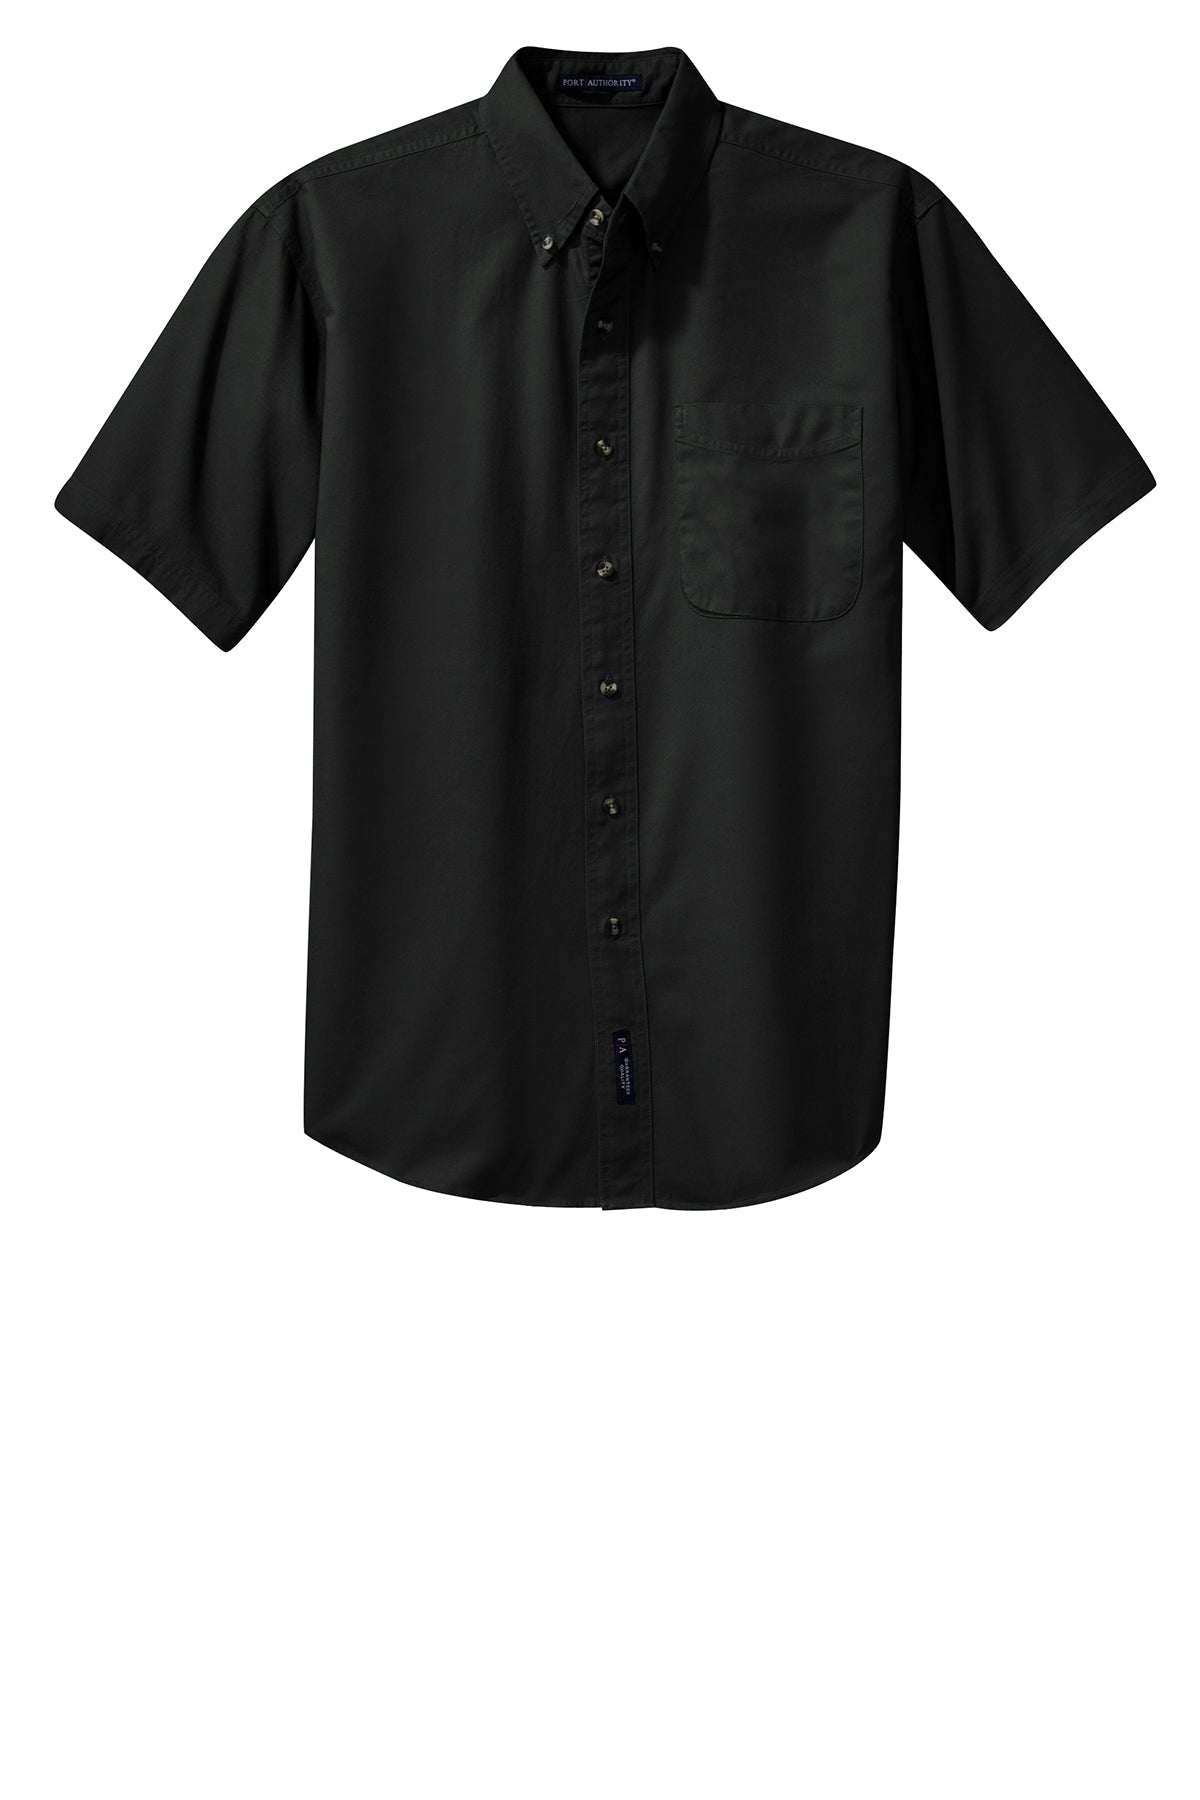 Port Authority® Short Sleeve Twill Shirt - S500T - Black